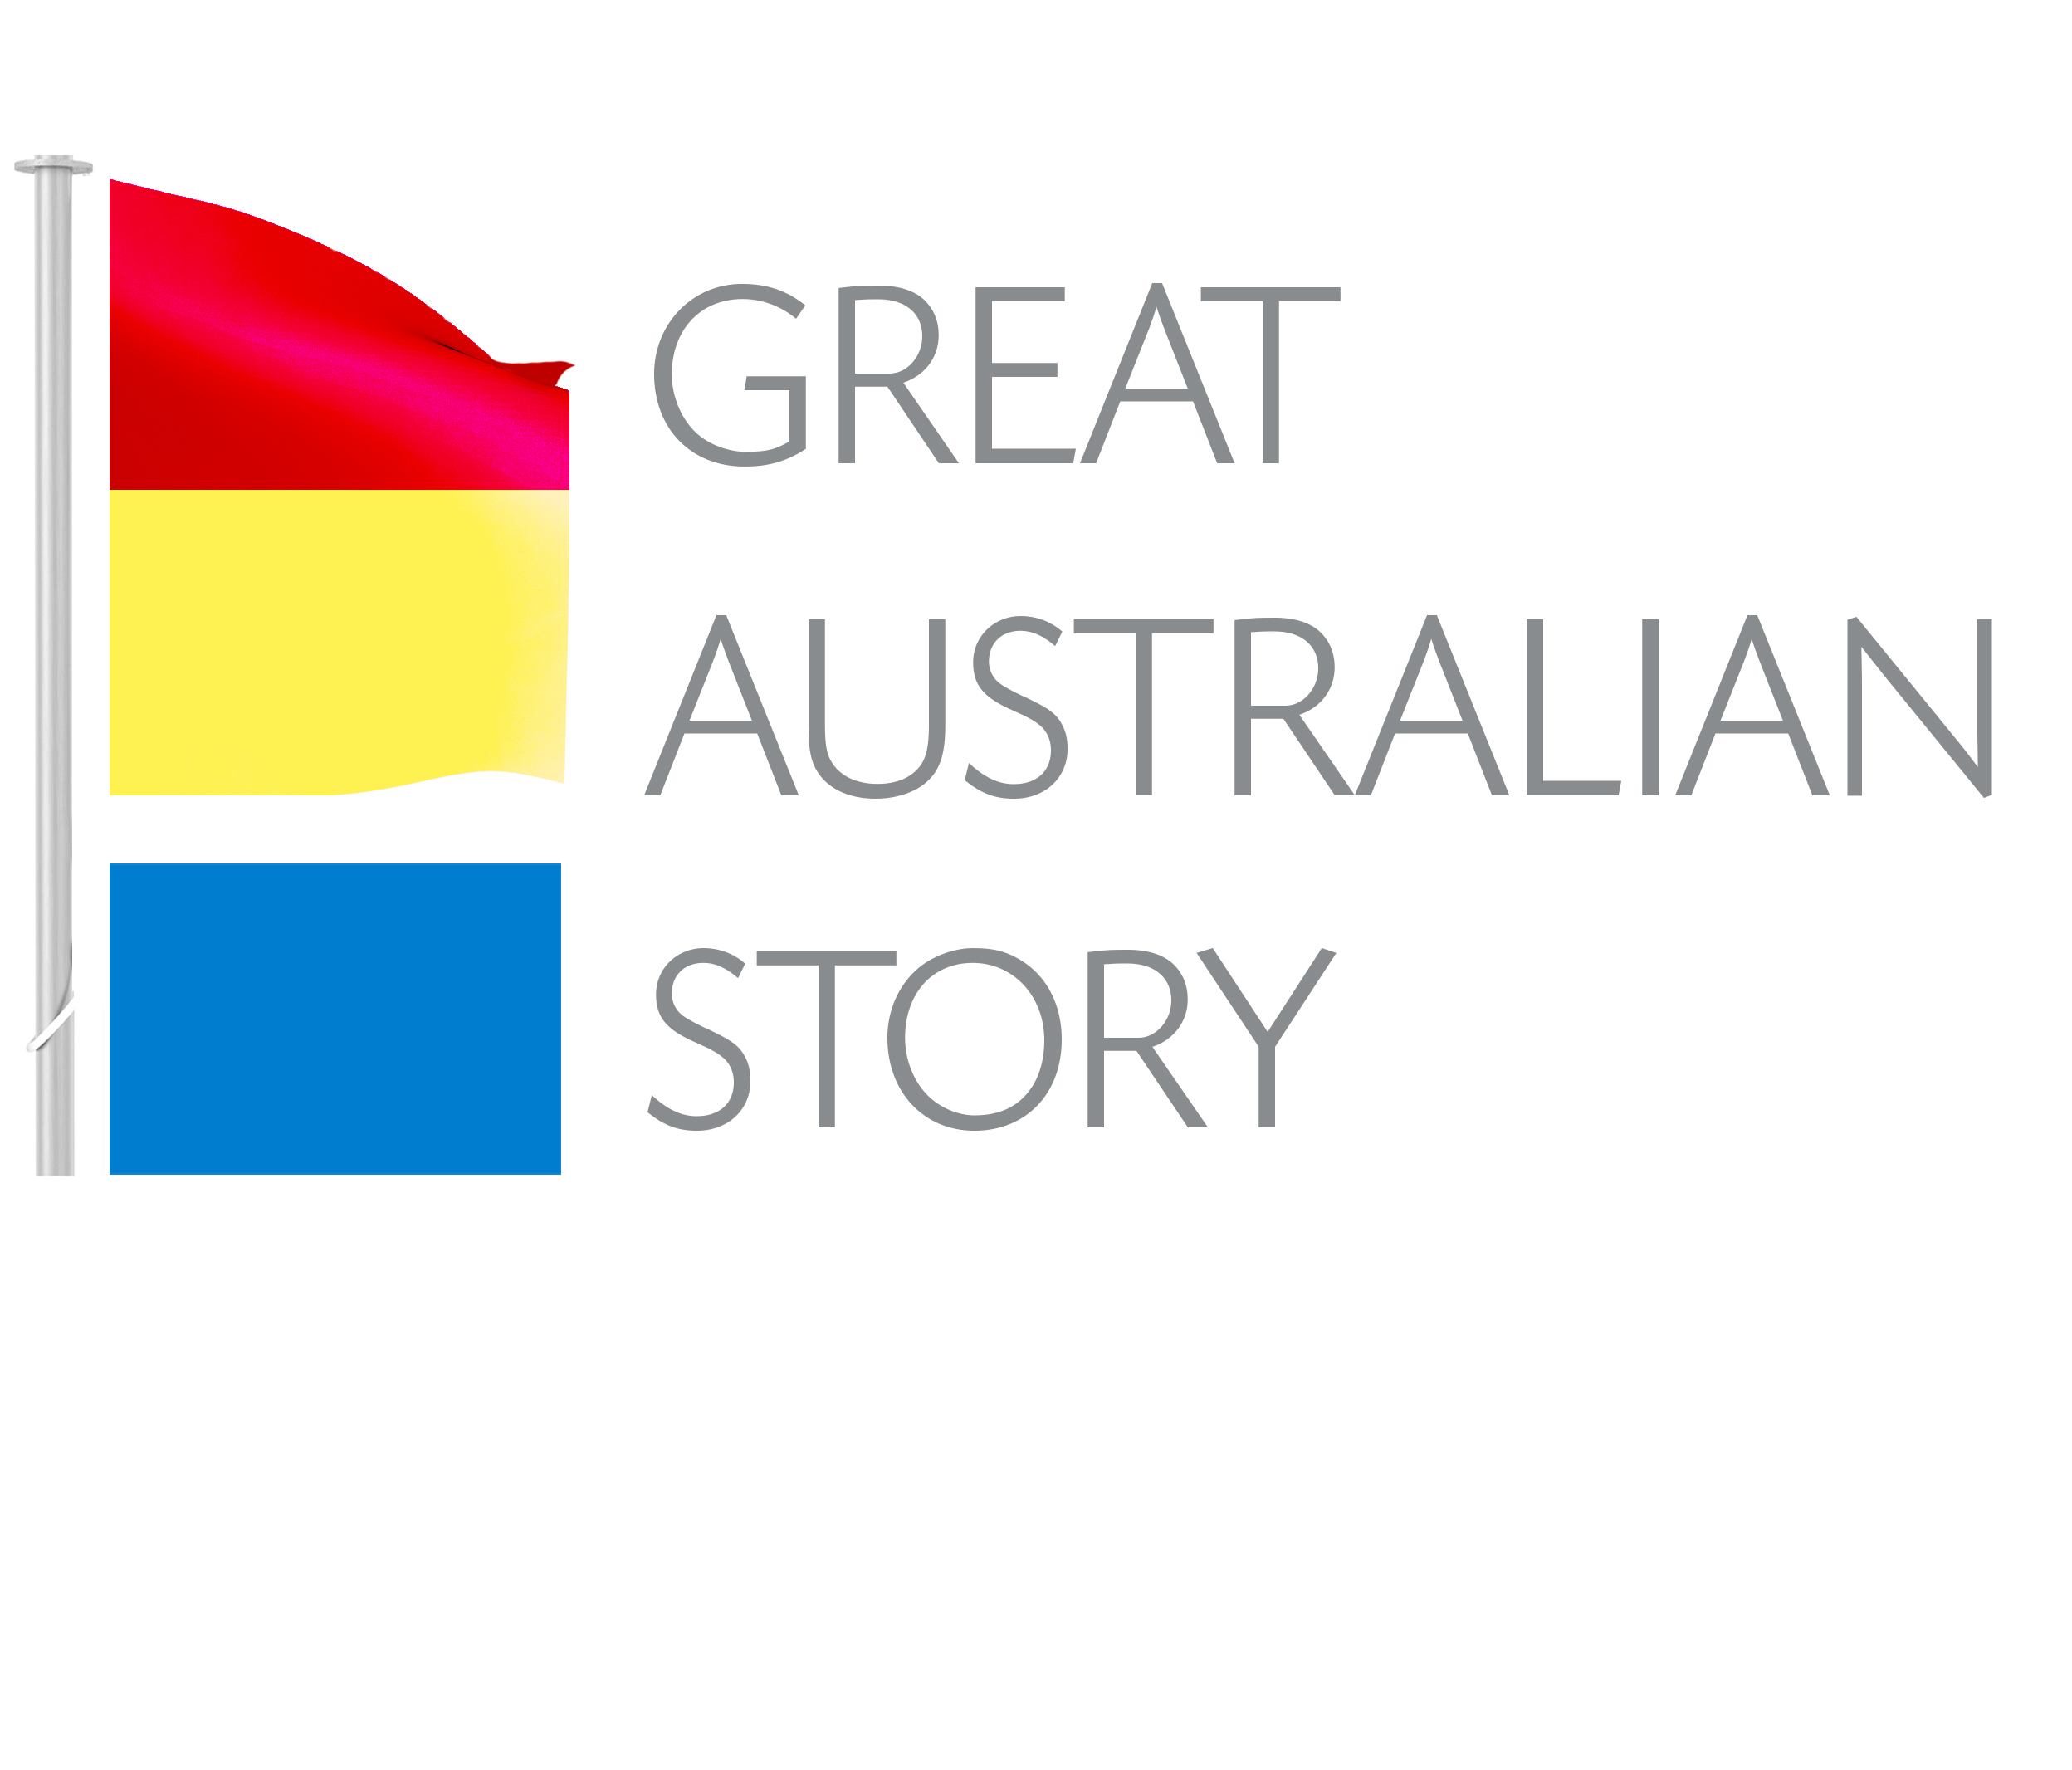 The Great Australian Story